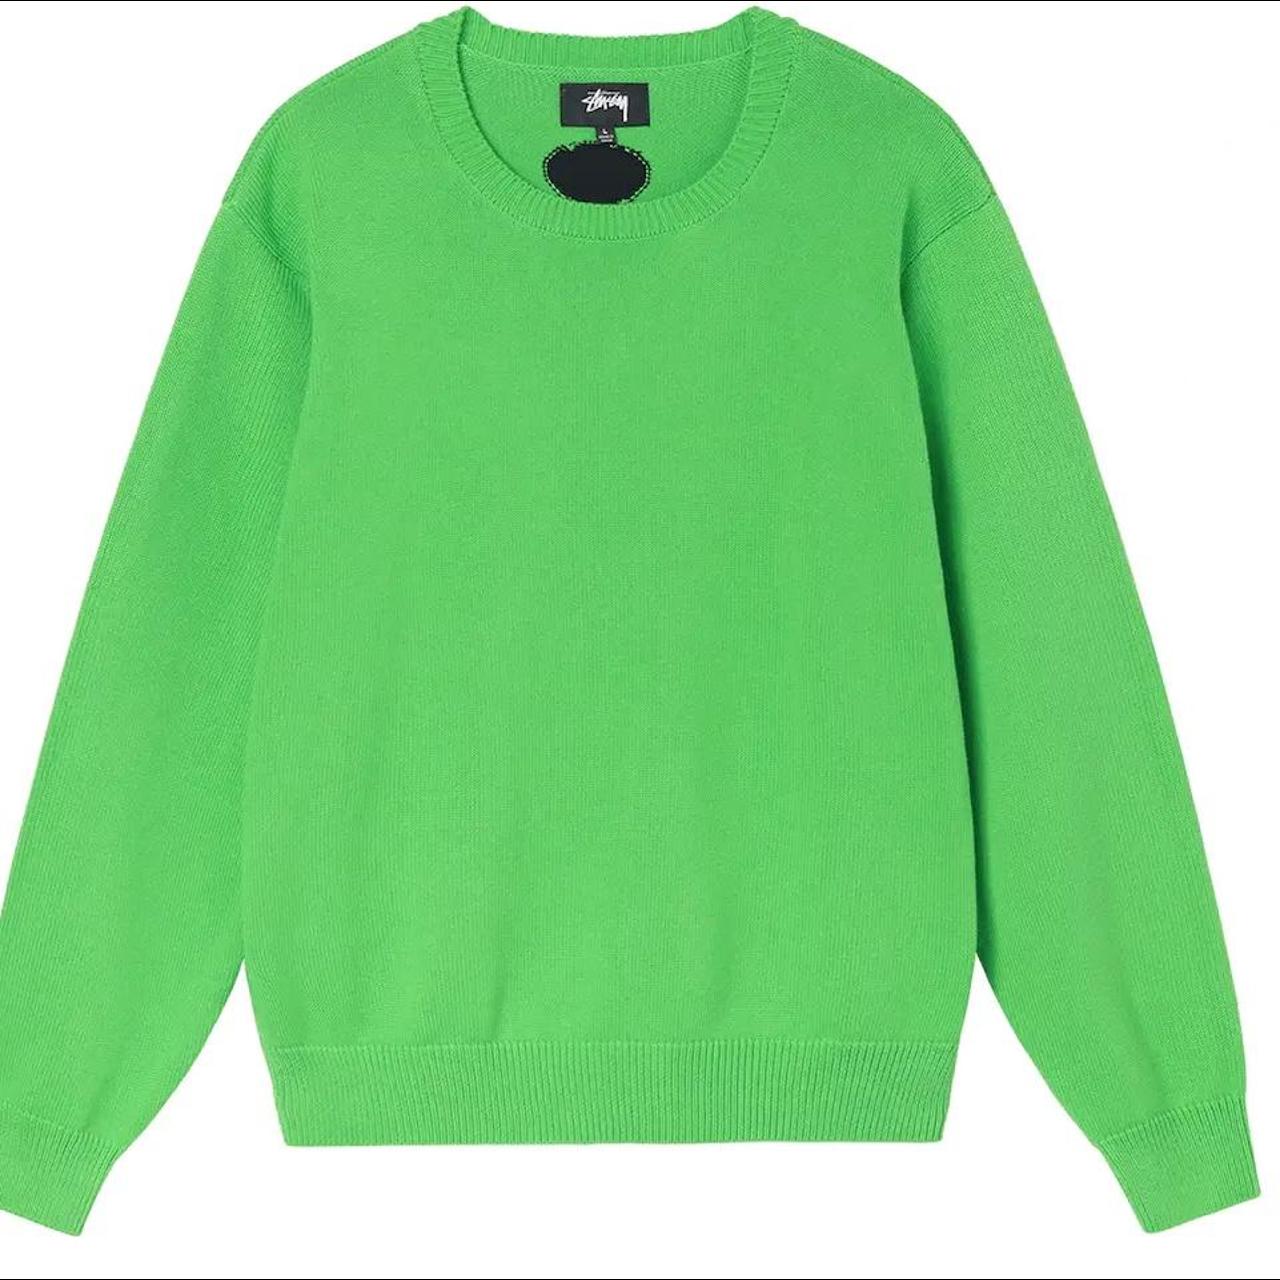 Stussy Bent Crown Knit Sweater Lime green color - Depop